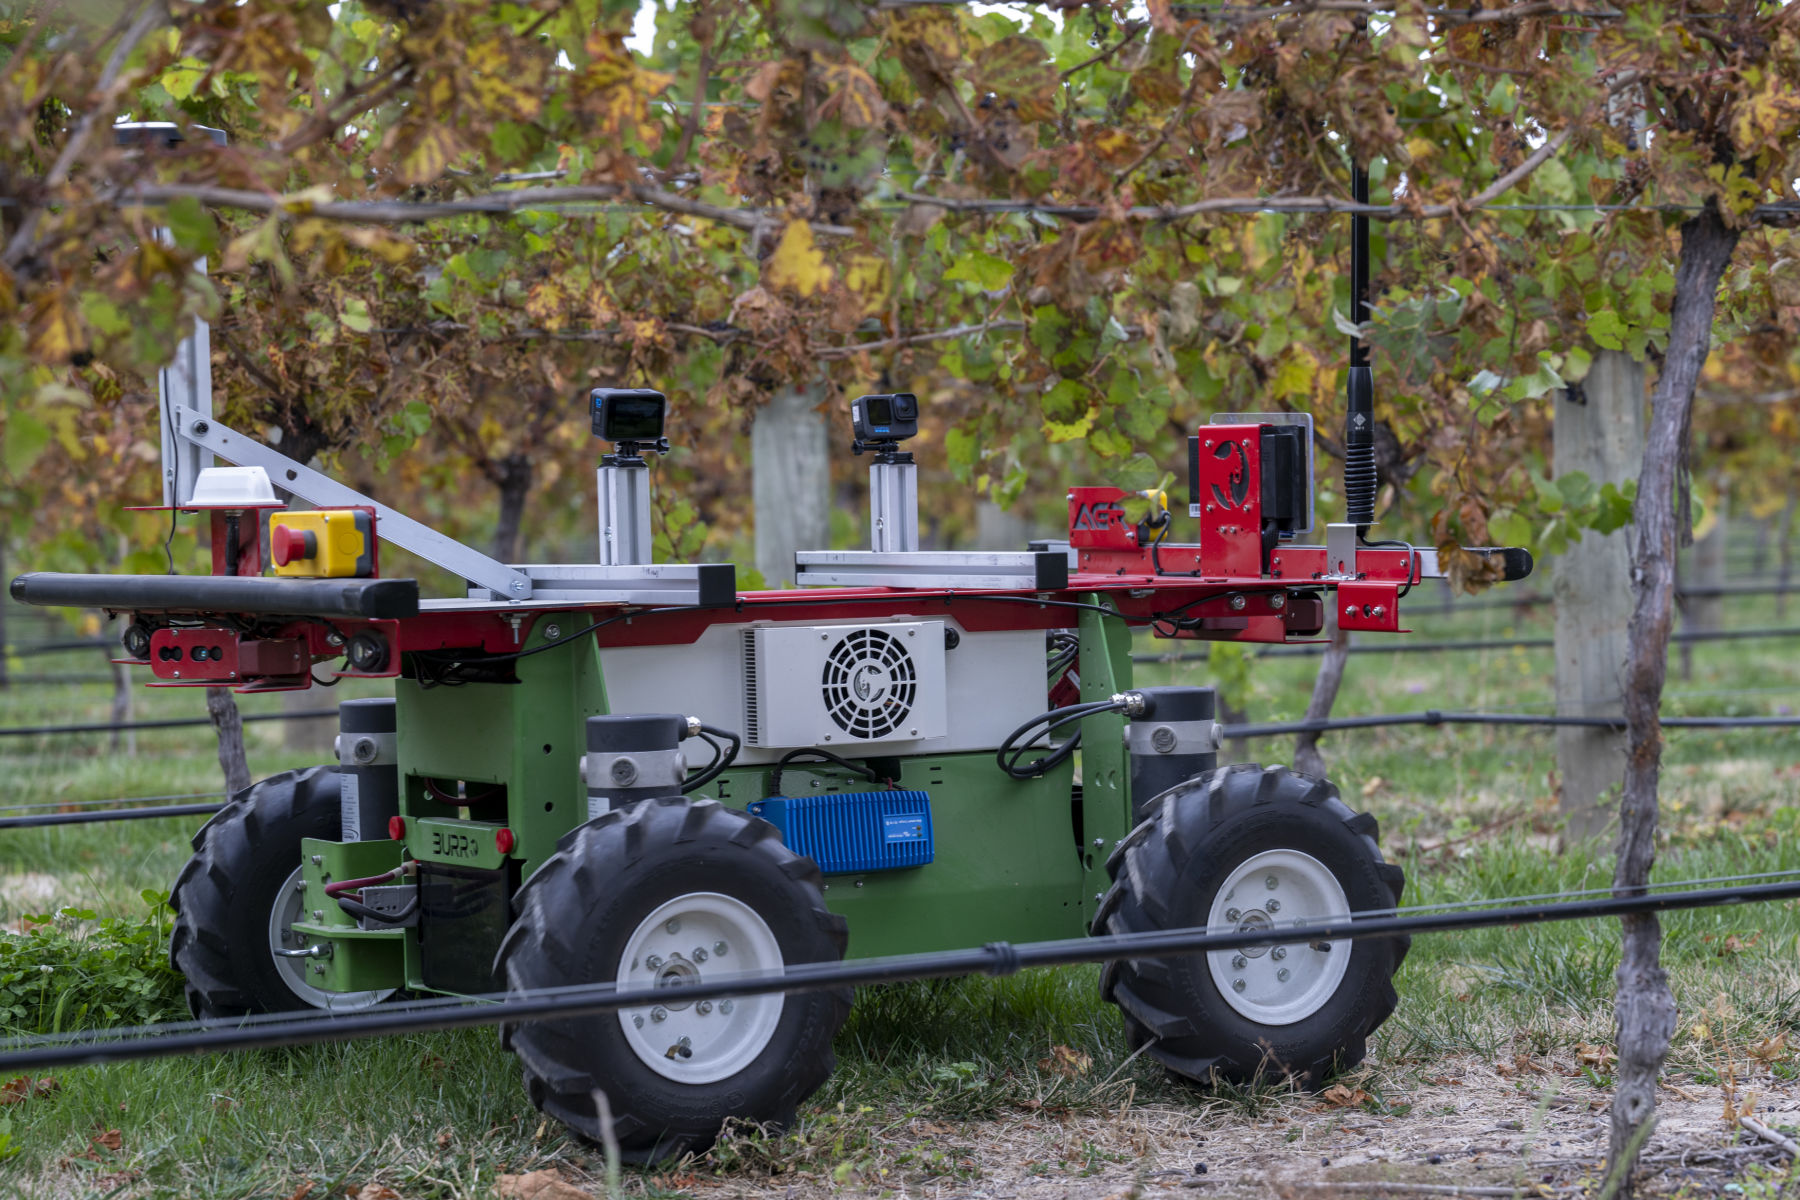 Vineyard surveys planned this Autumn using robotics, AI